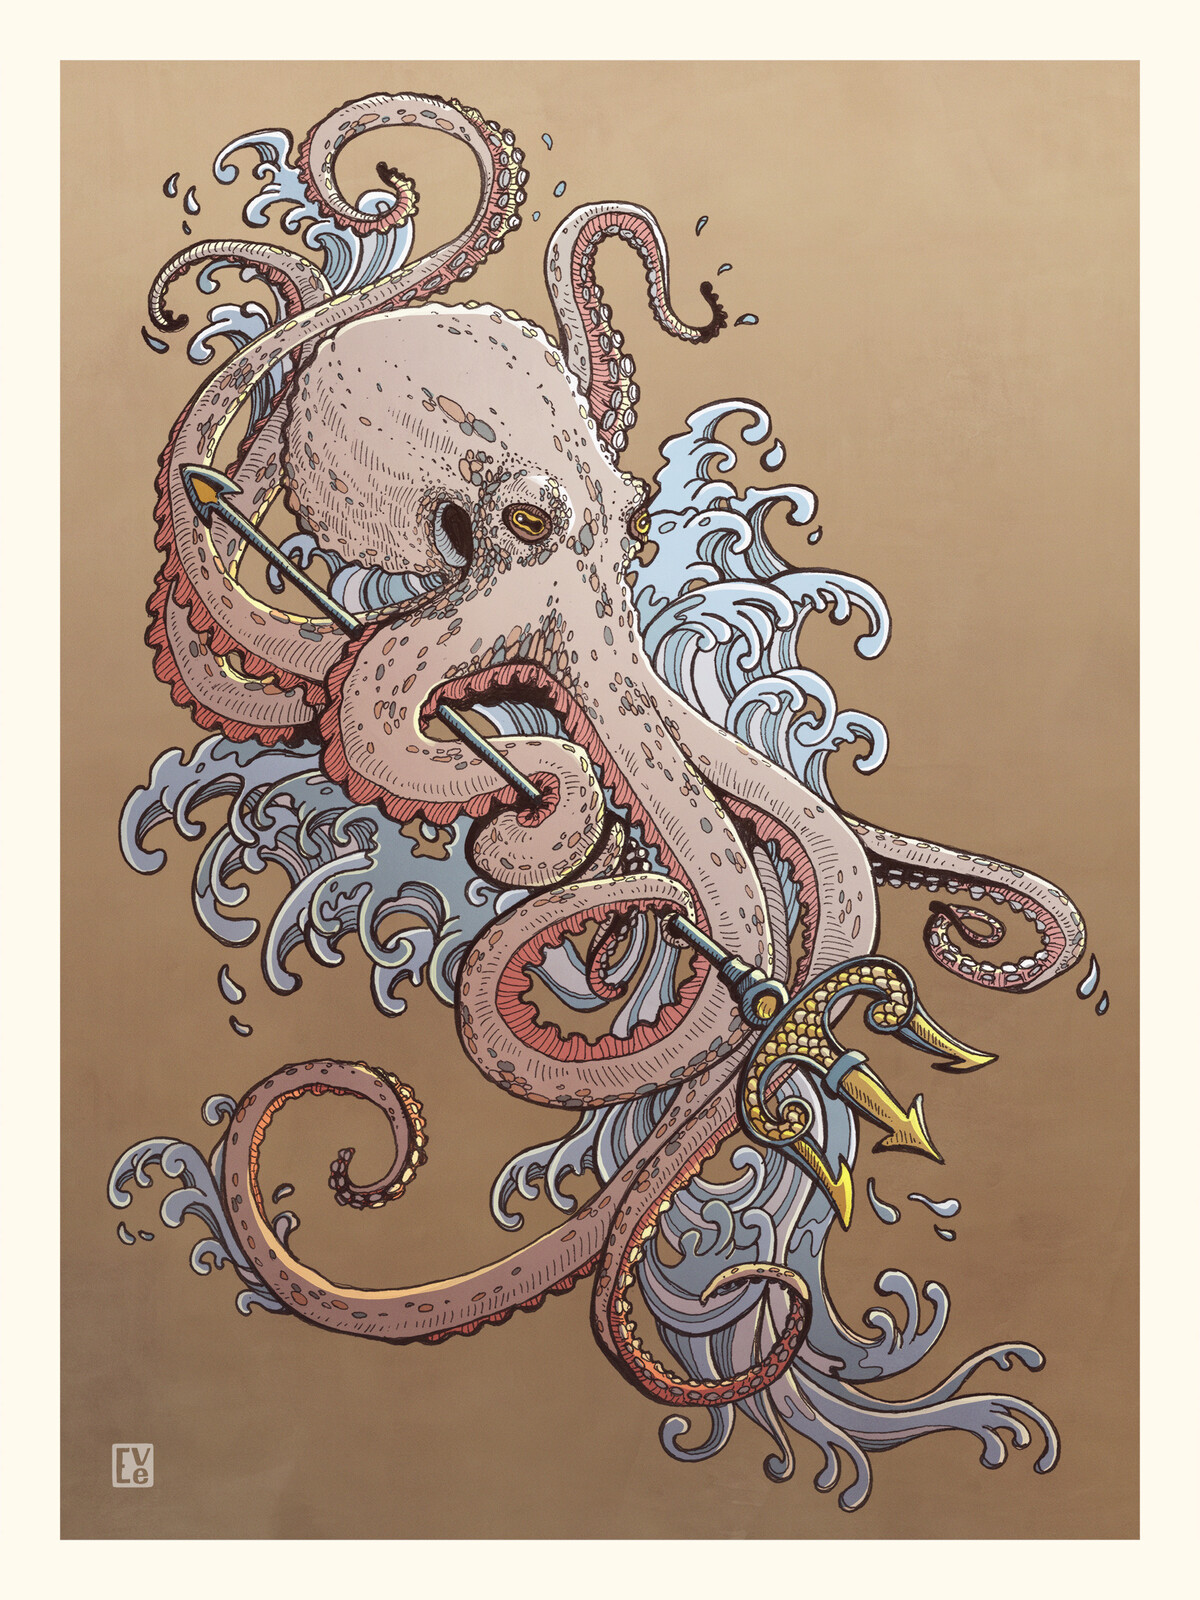 Guylaine's octopus